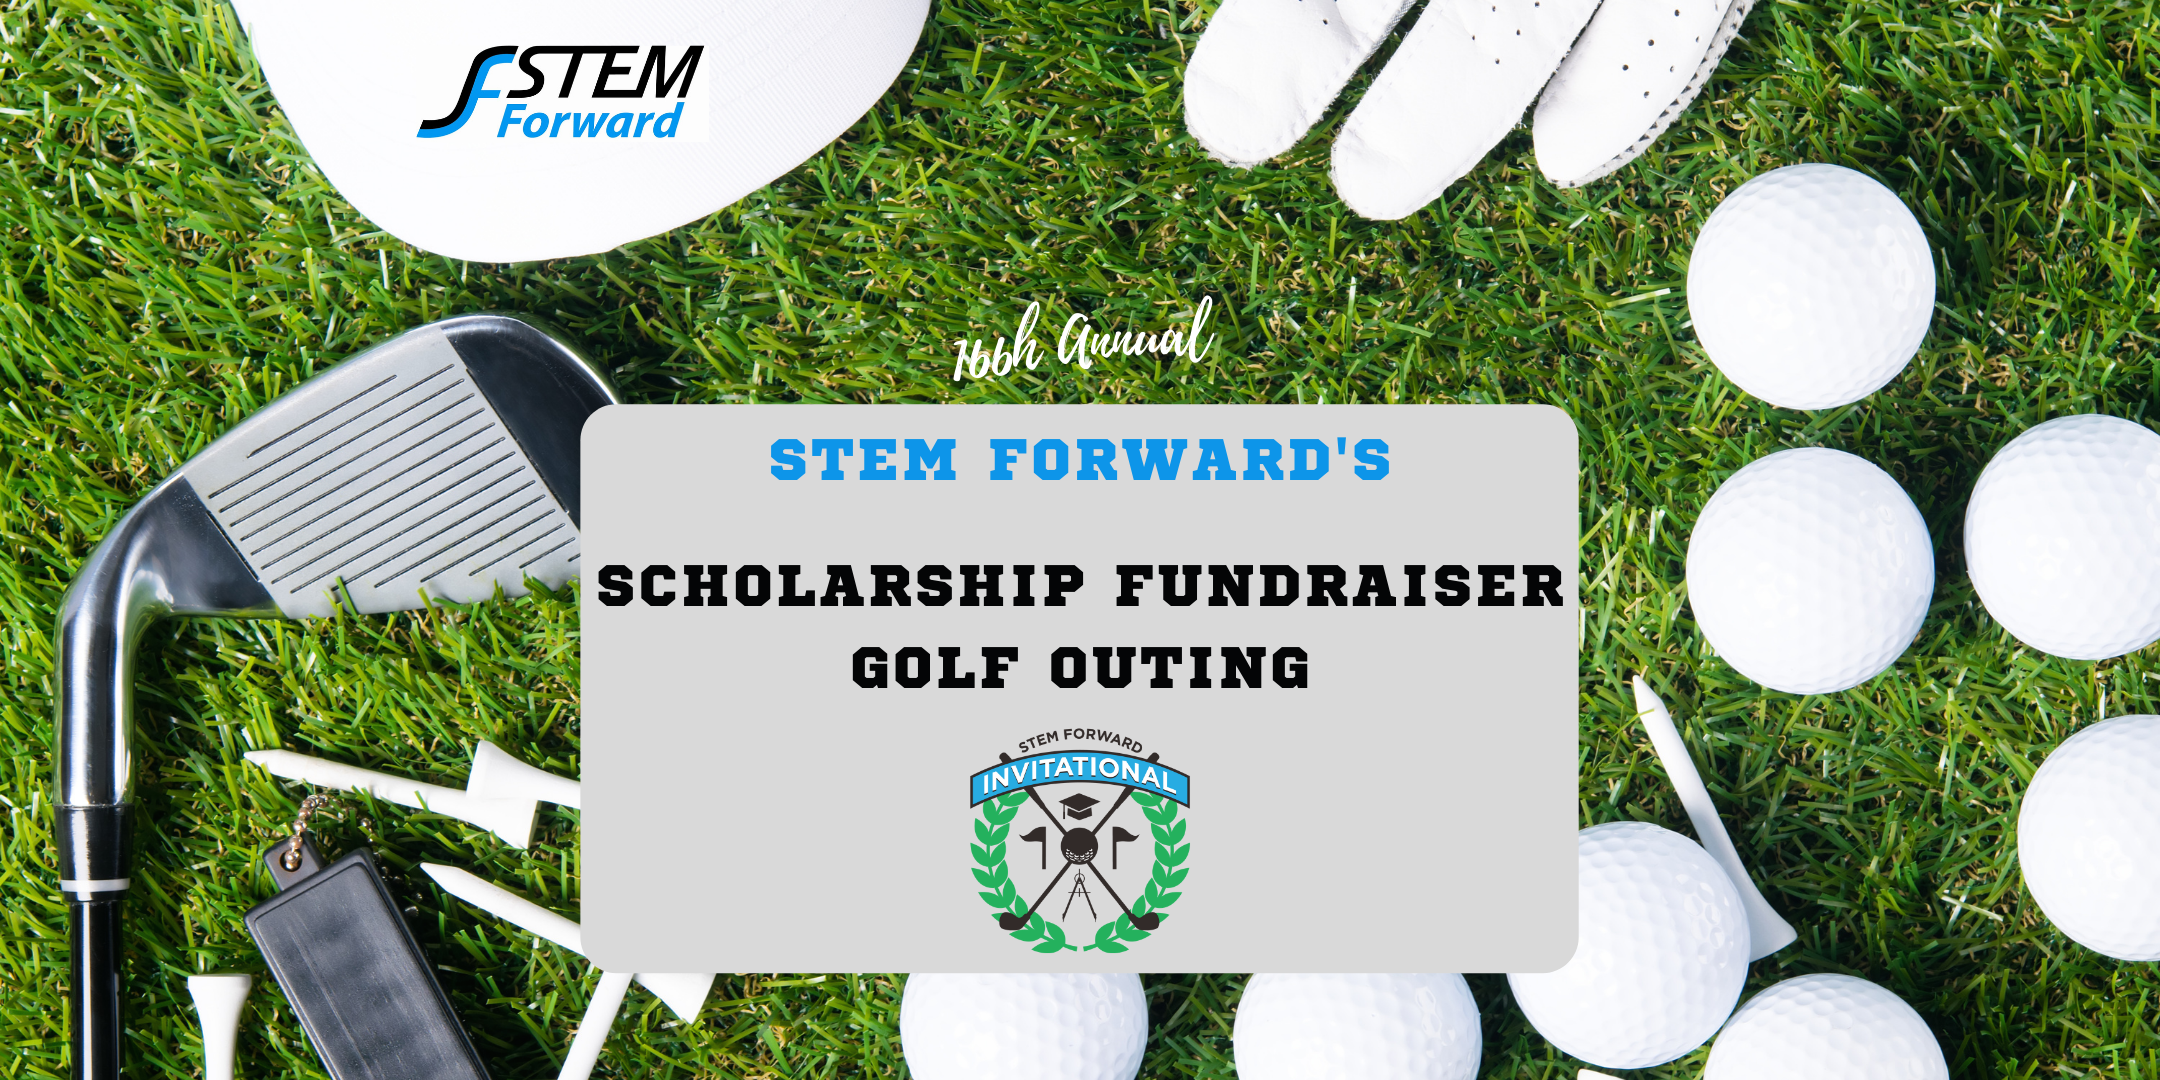 STEM Forward's 16th Annual Scholarship Program Fundraiser Golf Outing